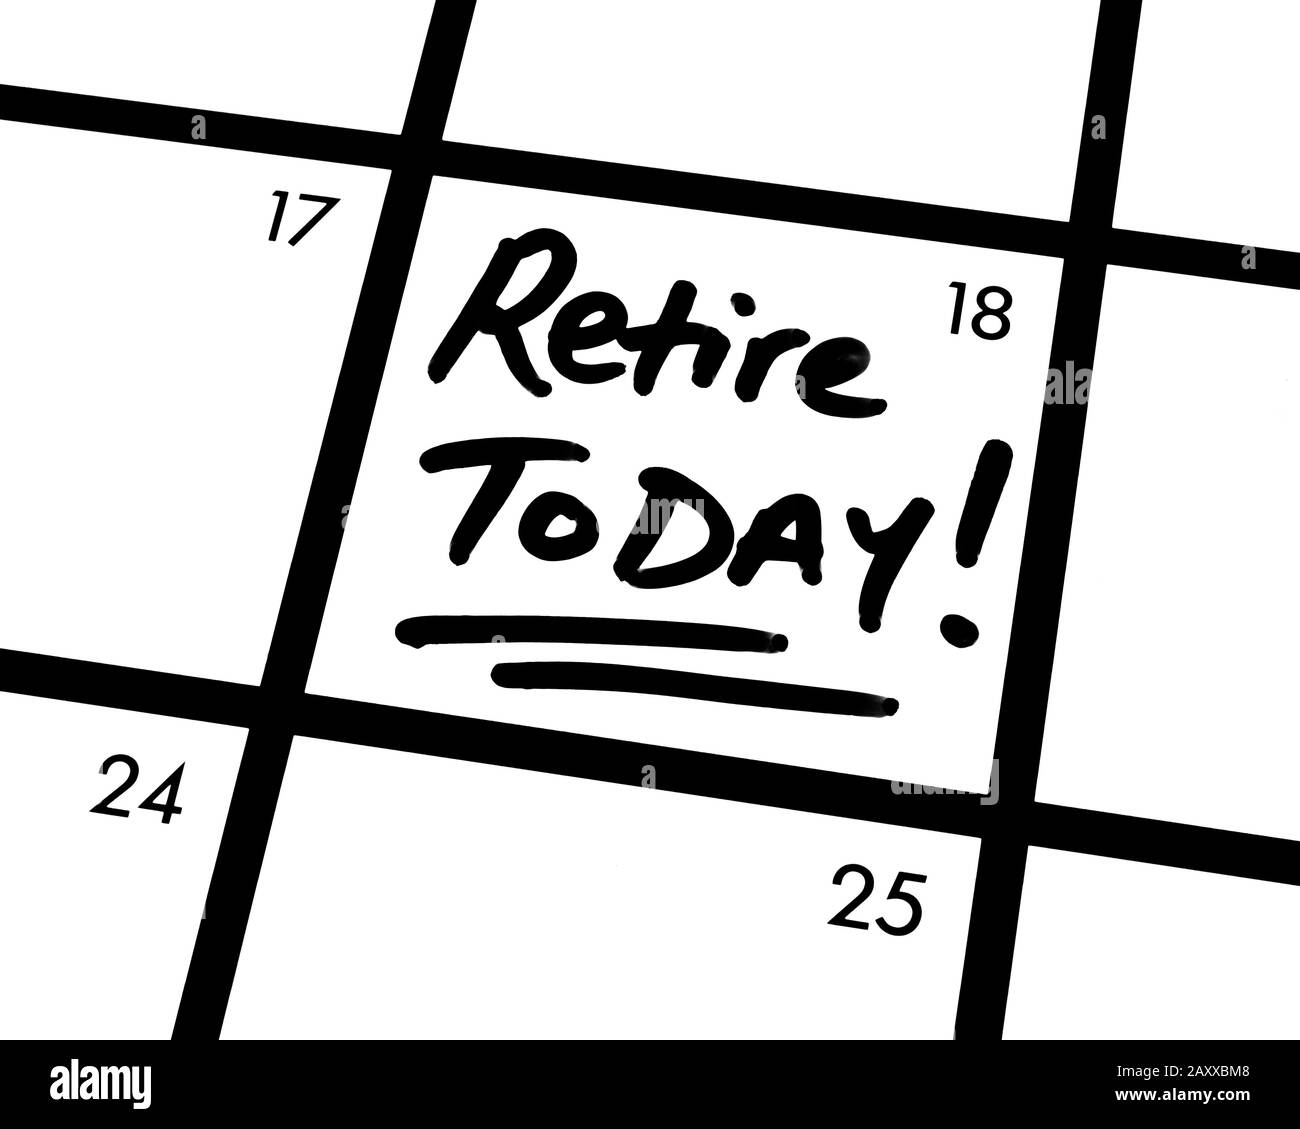 Close-up of a Retire TODAY! calendar entry. Stock Photo